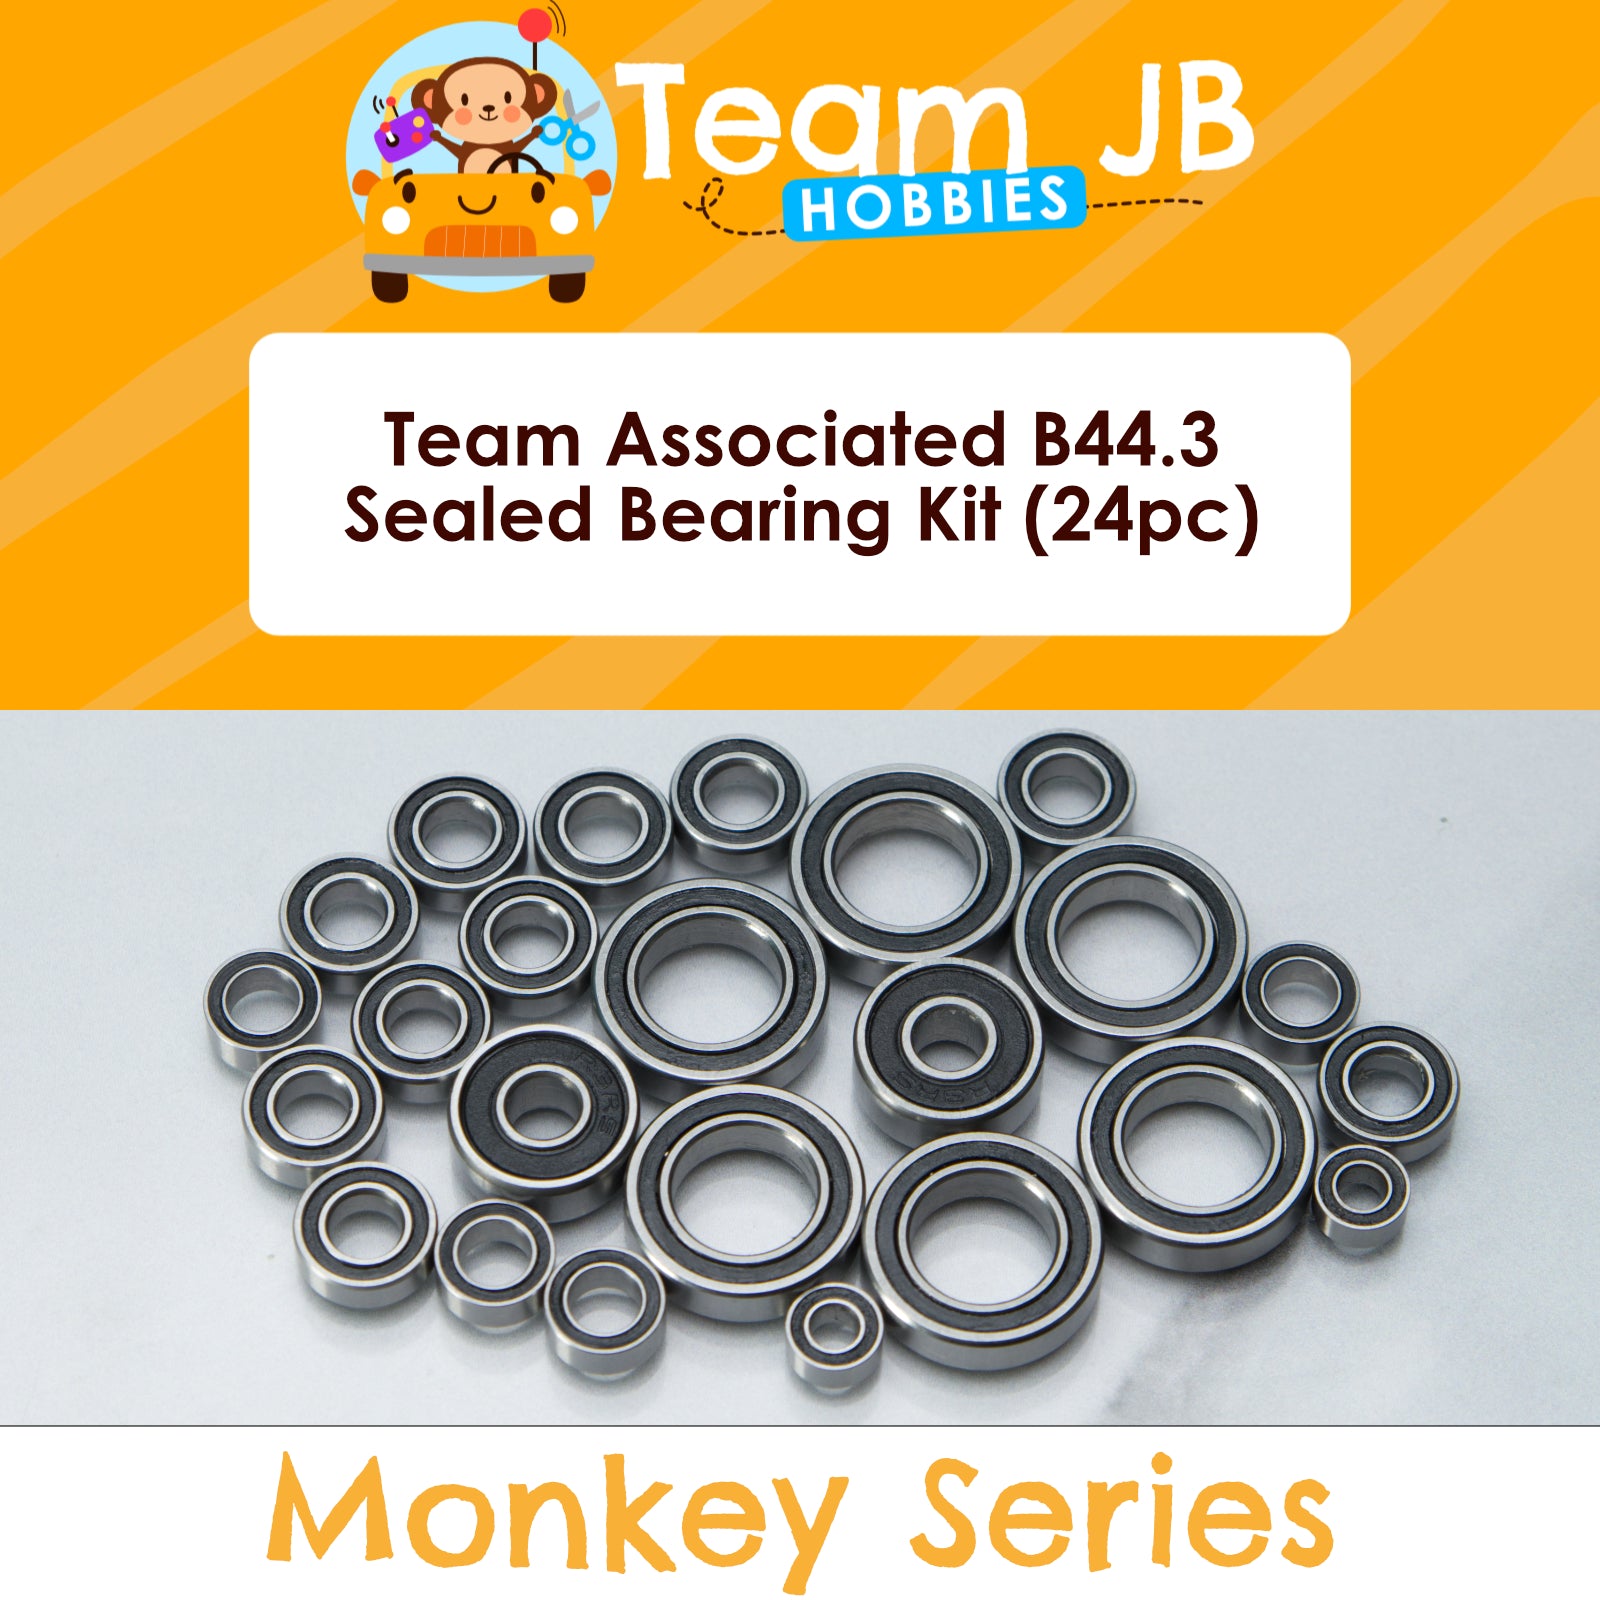 Team Associated B44.3 - Sealed Bearing Kit